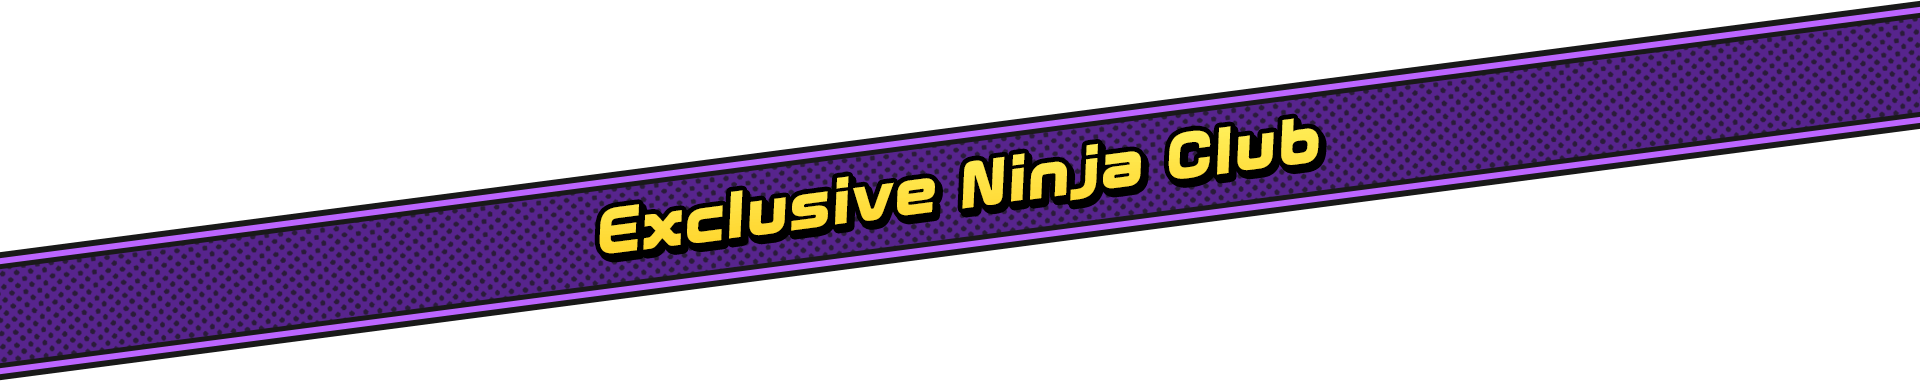 Ninjala Exclusive Ninja Club